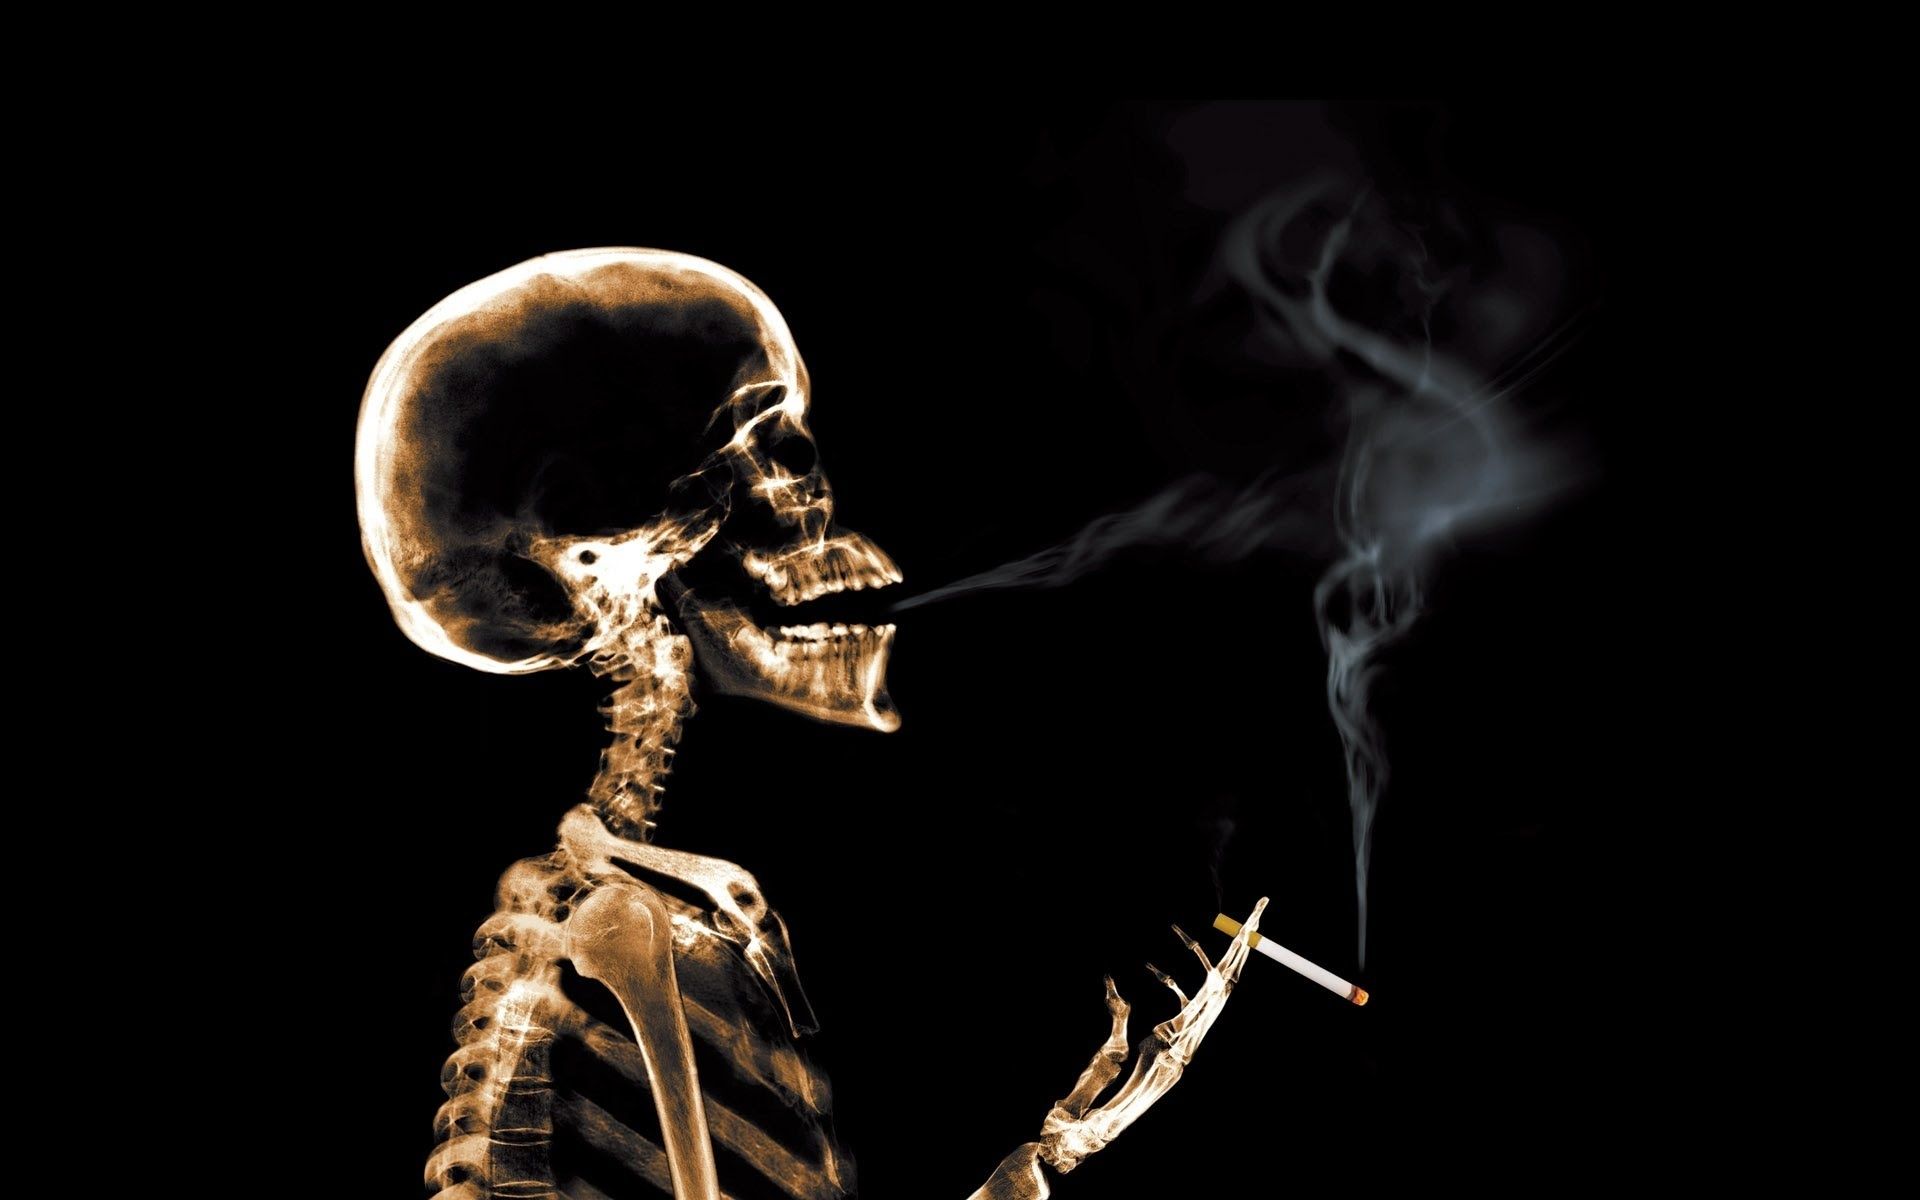 Smoking Skull Live Wallpaper - YouTube